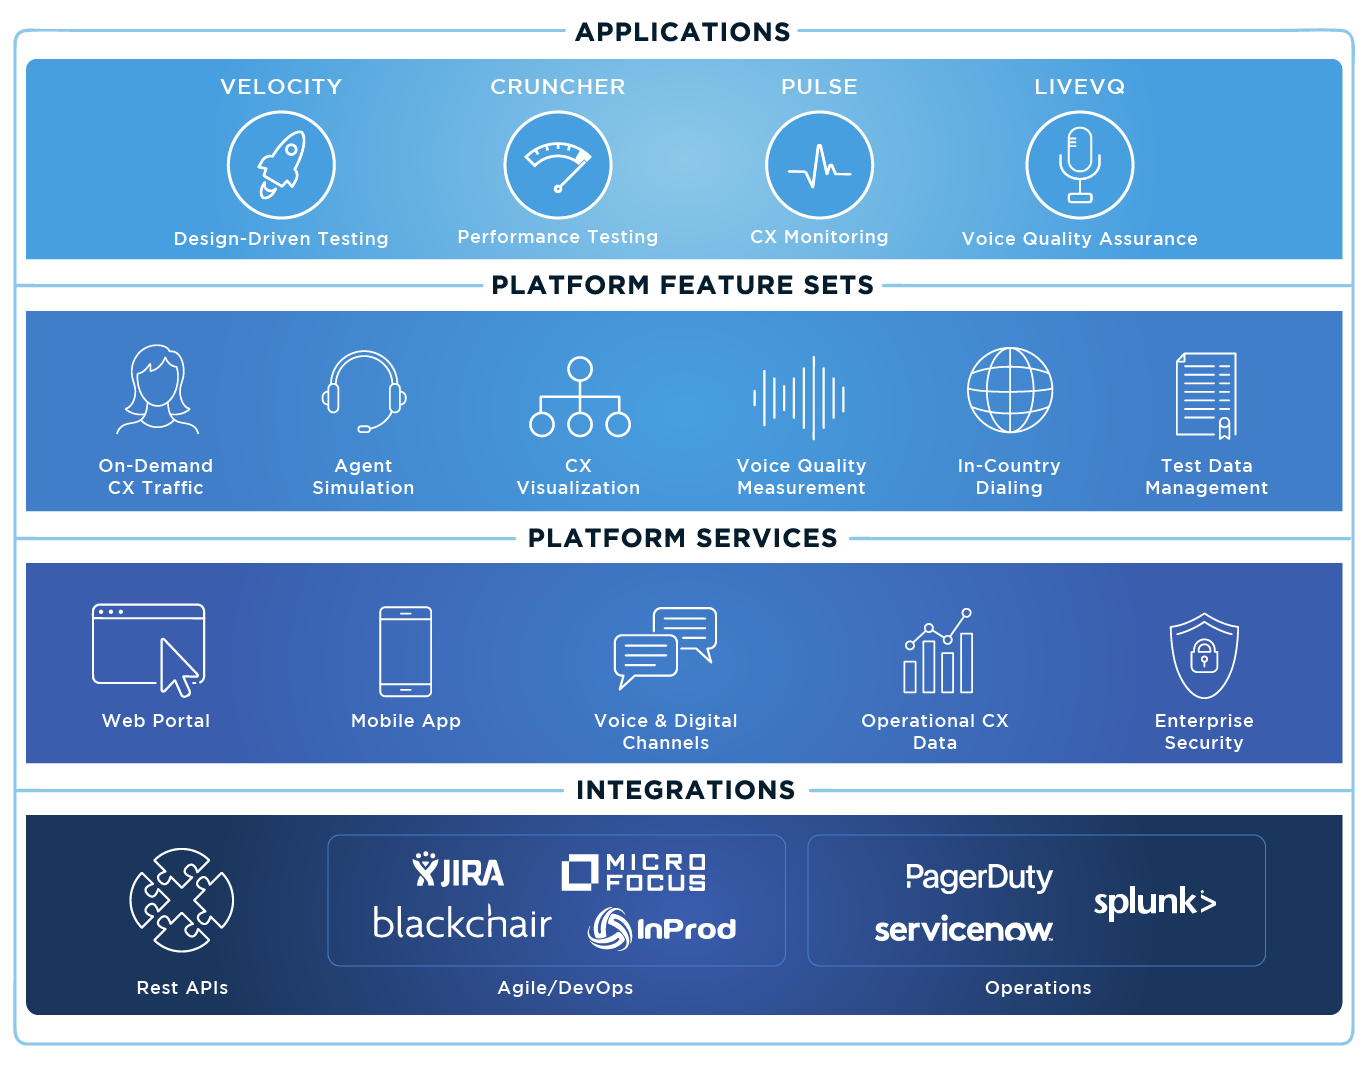 Cyara Platform applications, feature sets, services, integrations